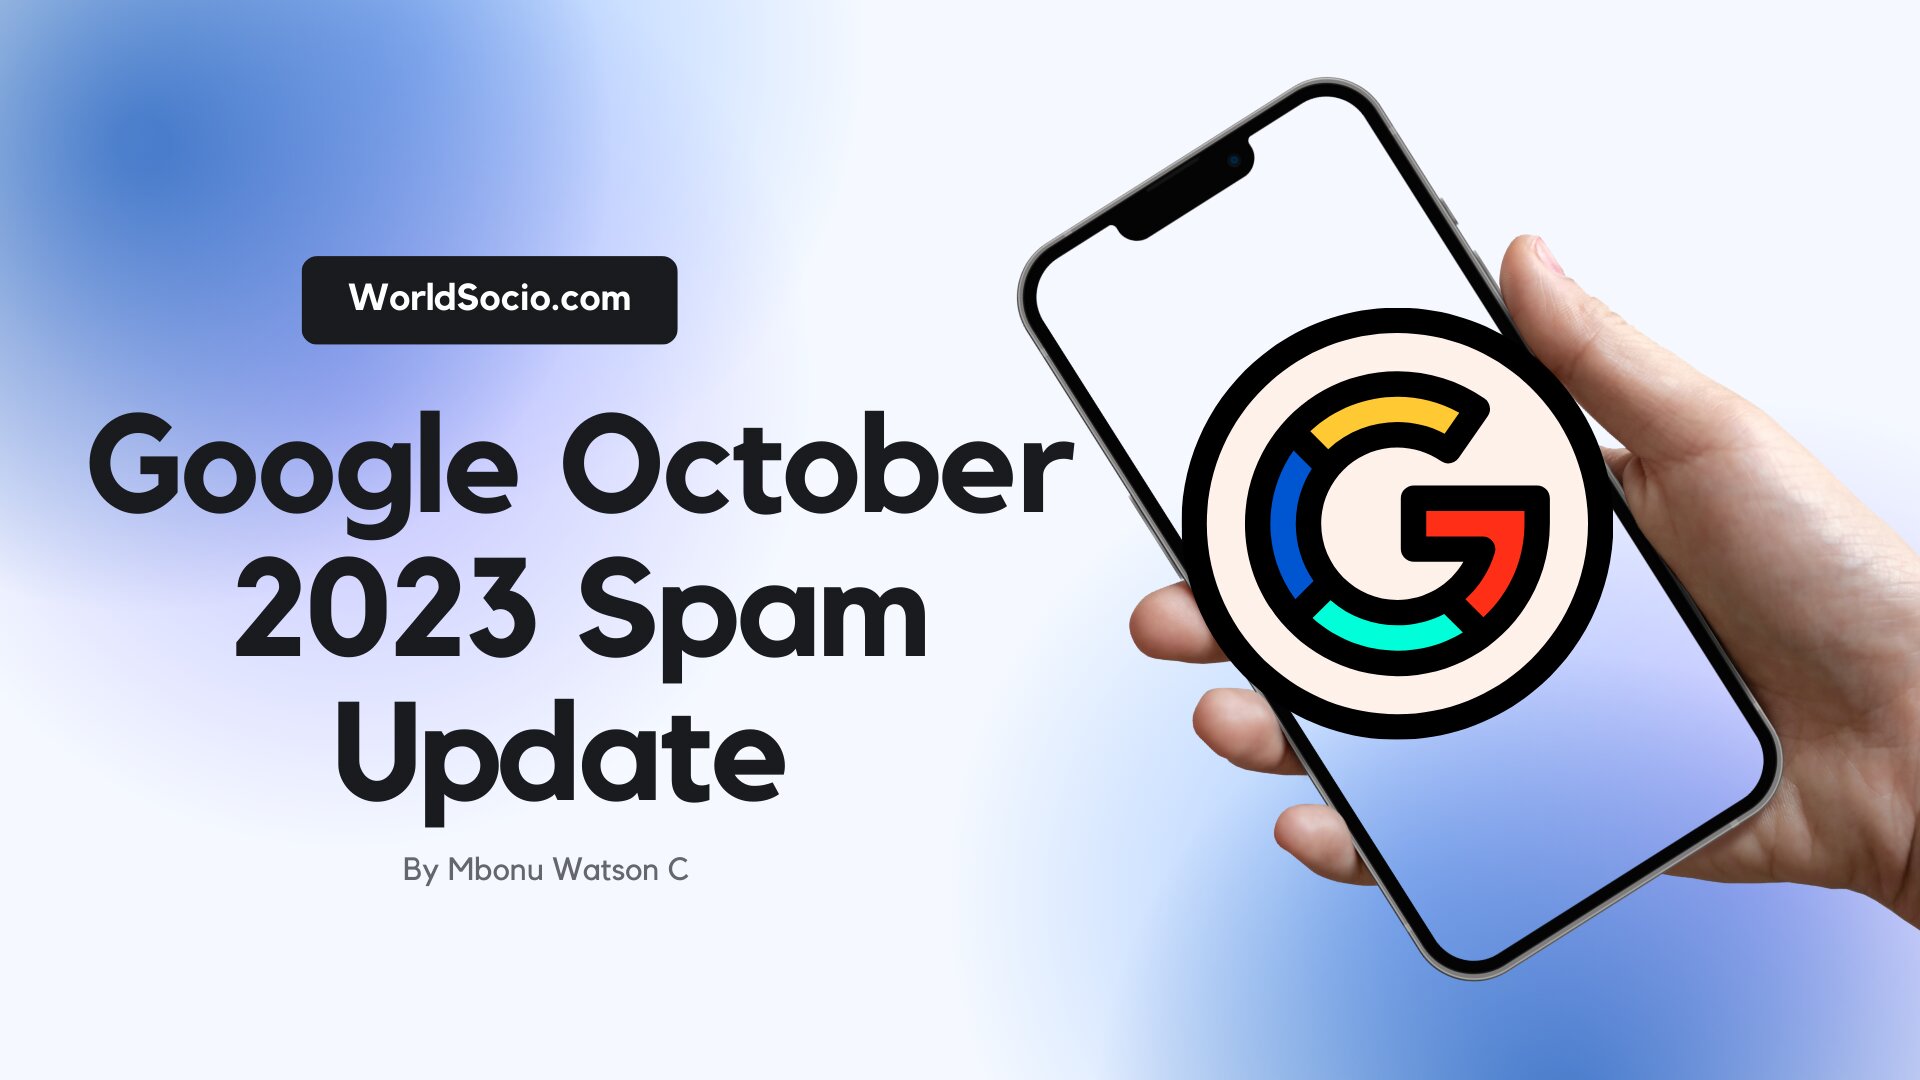 Google October 2023 Spam Update, worldsocio.jpg